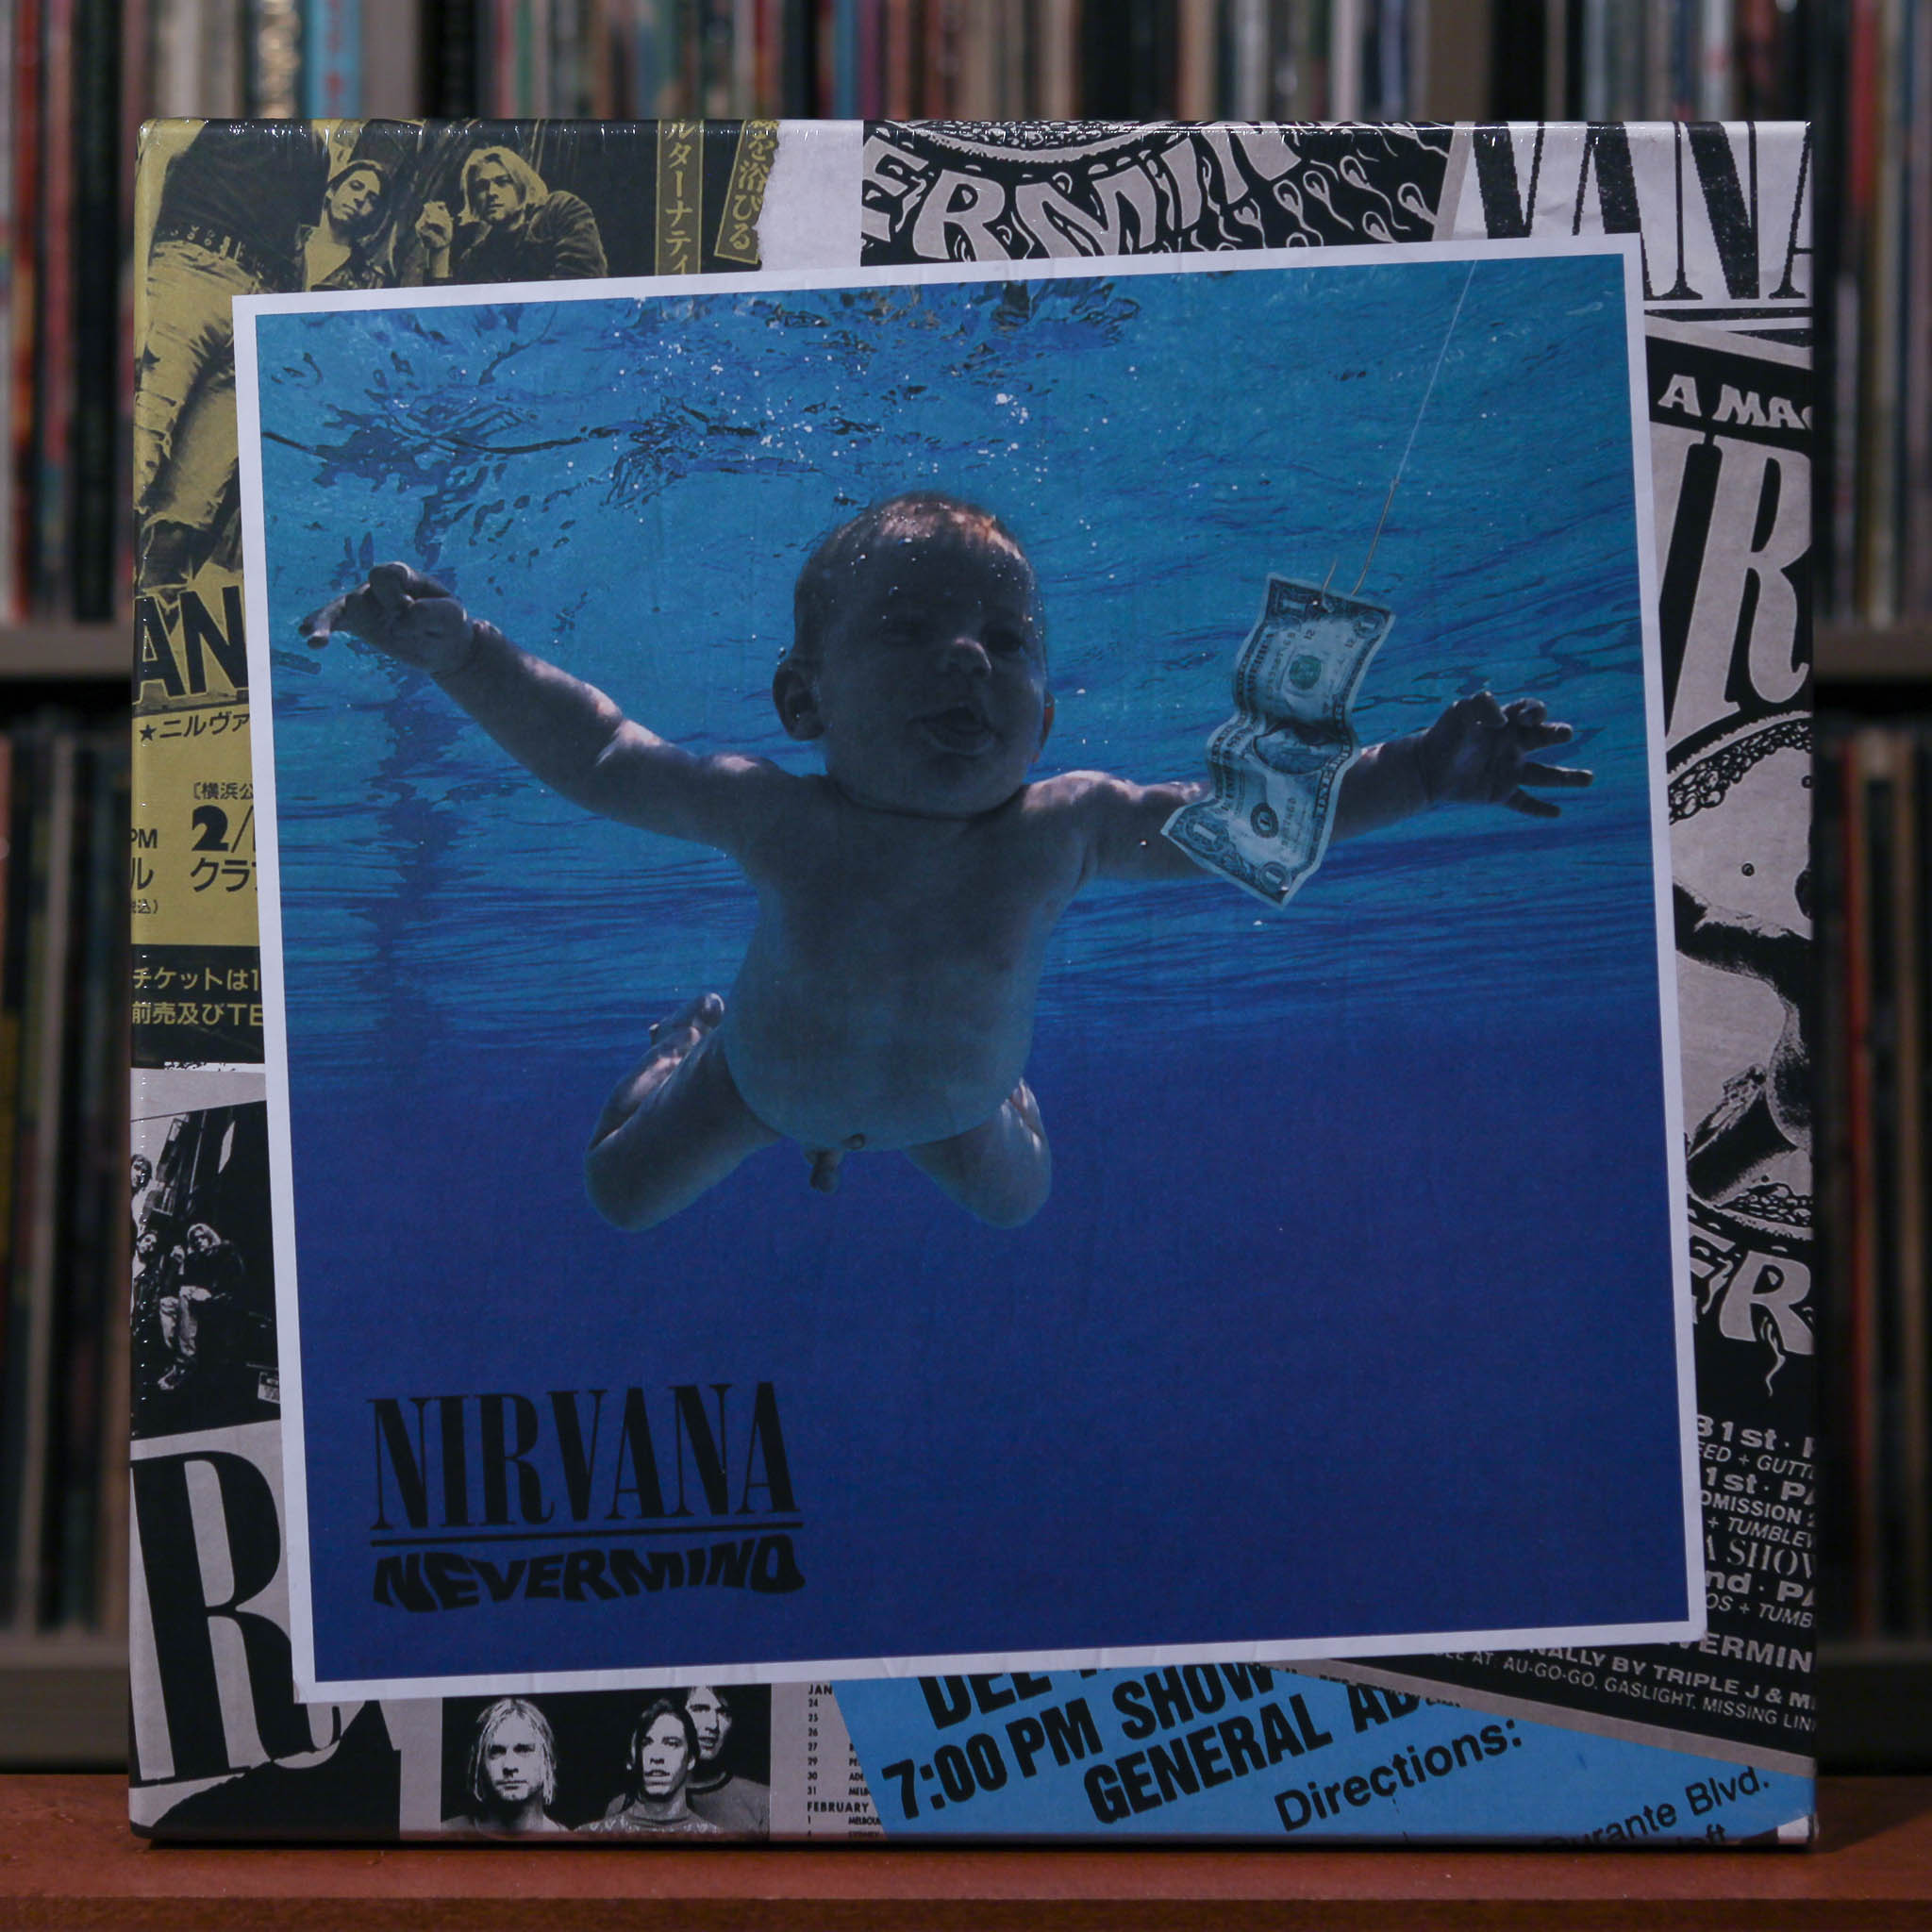 Nirvana - Nevermind - Deluxe Edition Ltd 4CD+BR Box Set - 2021 Geffen